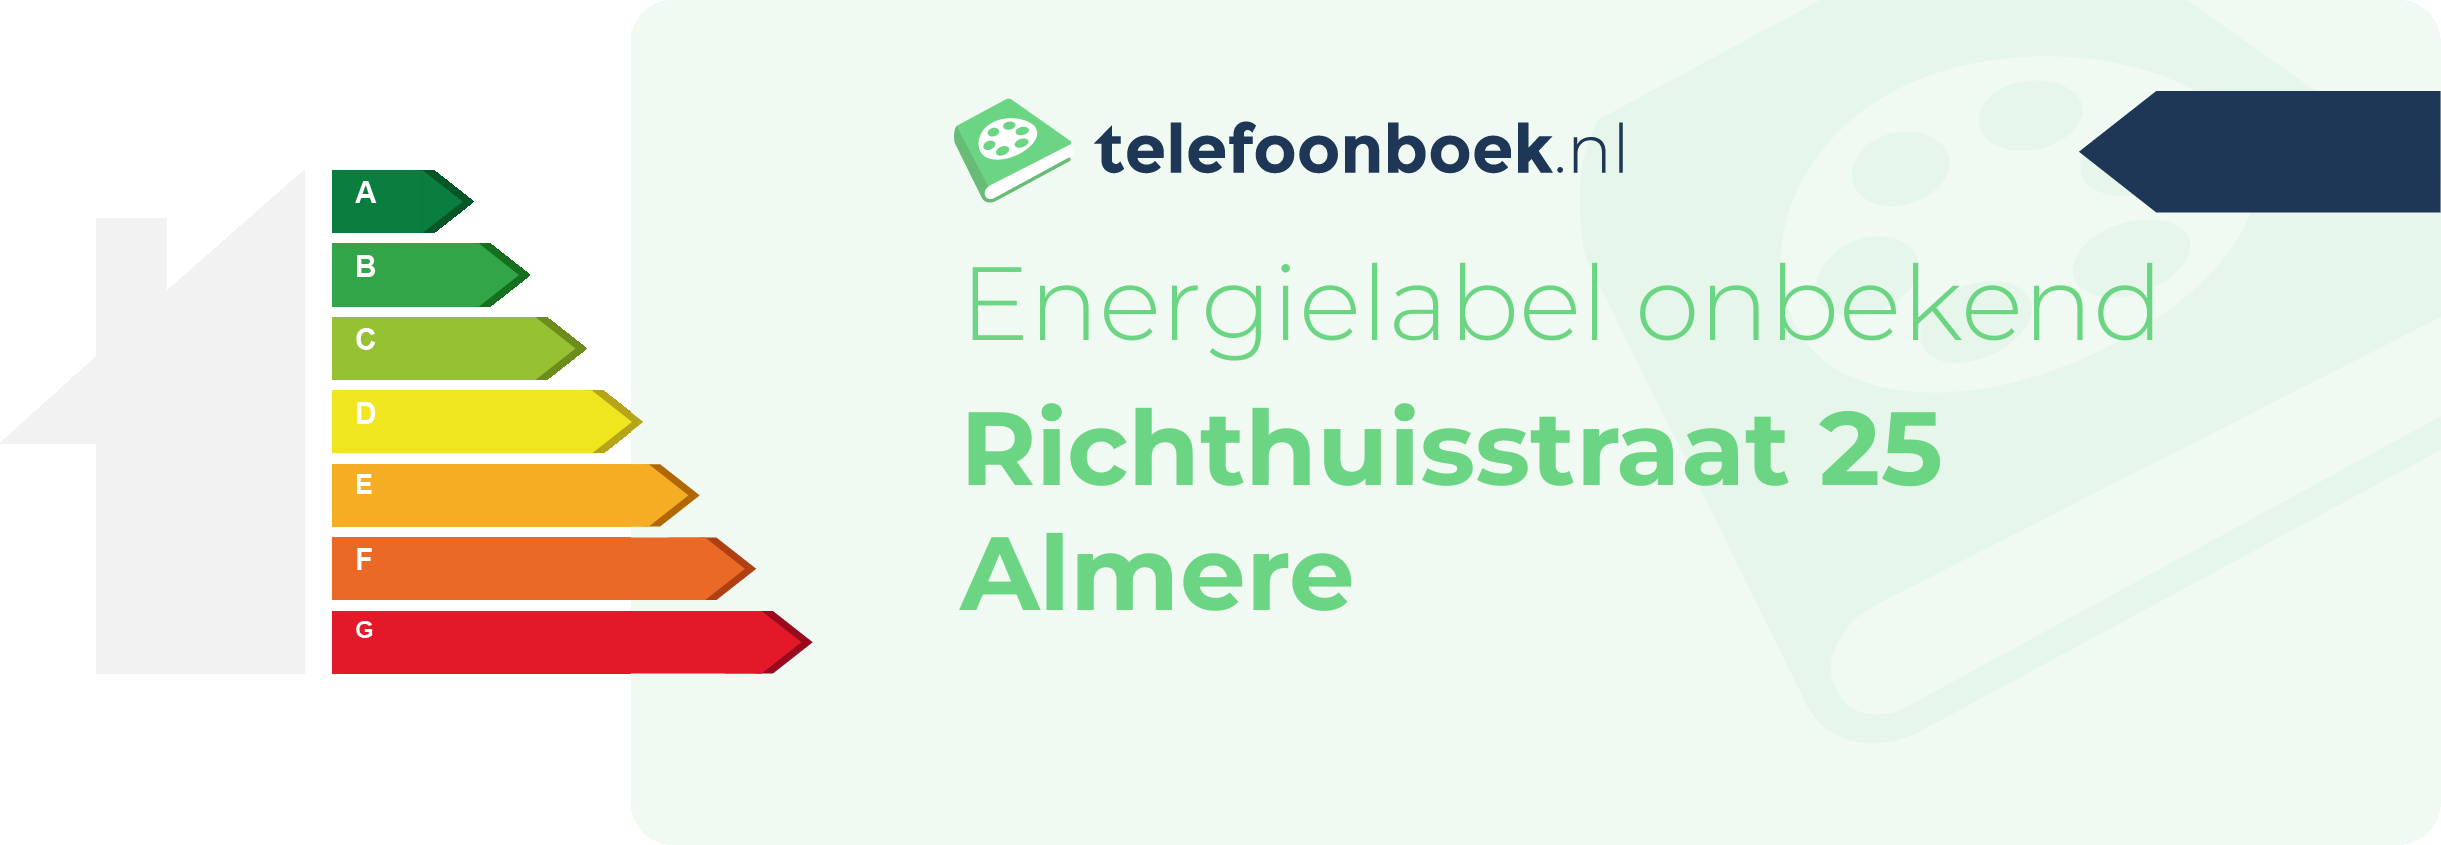 Energielabel Richthuisstraat 25 Almere